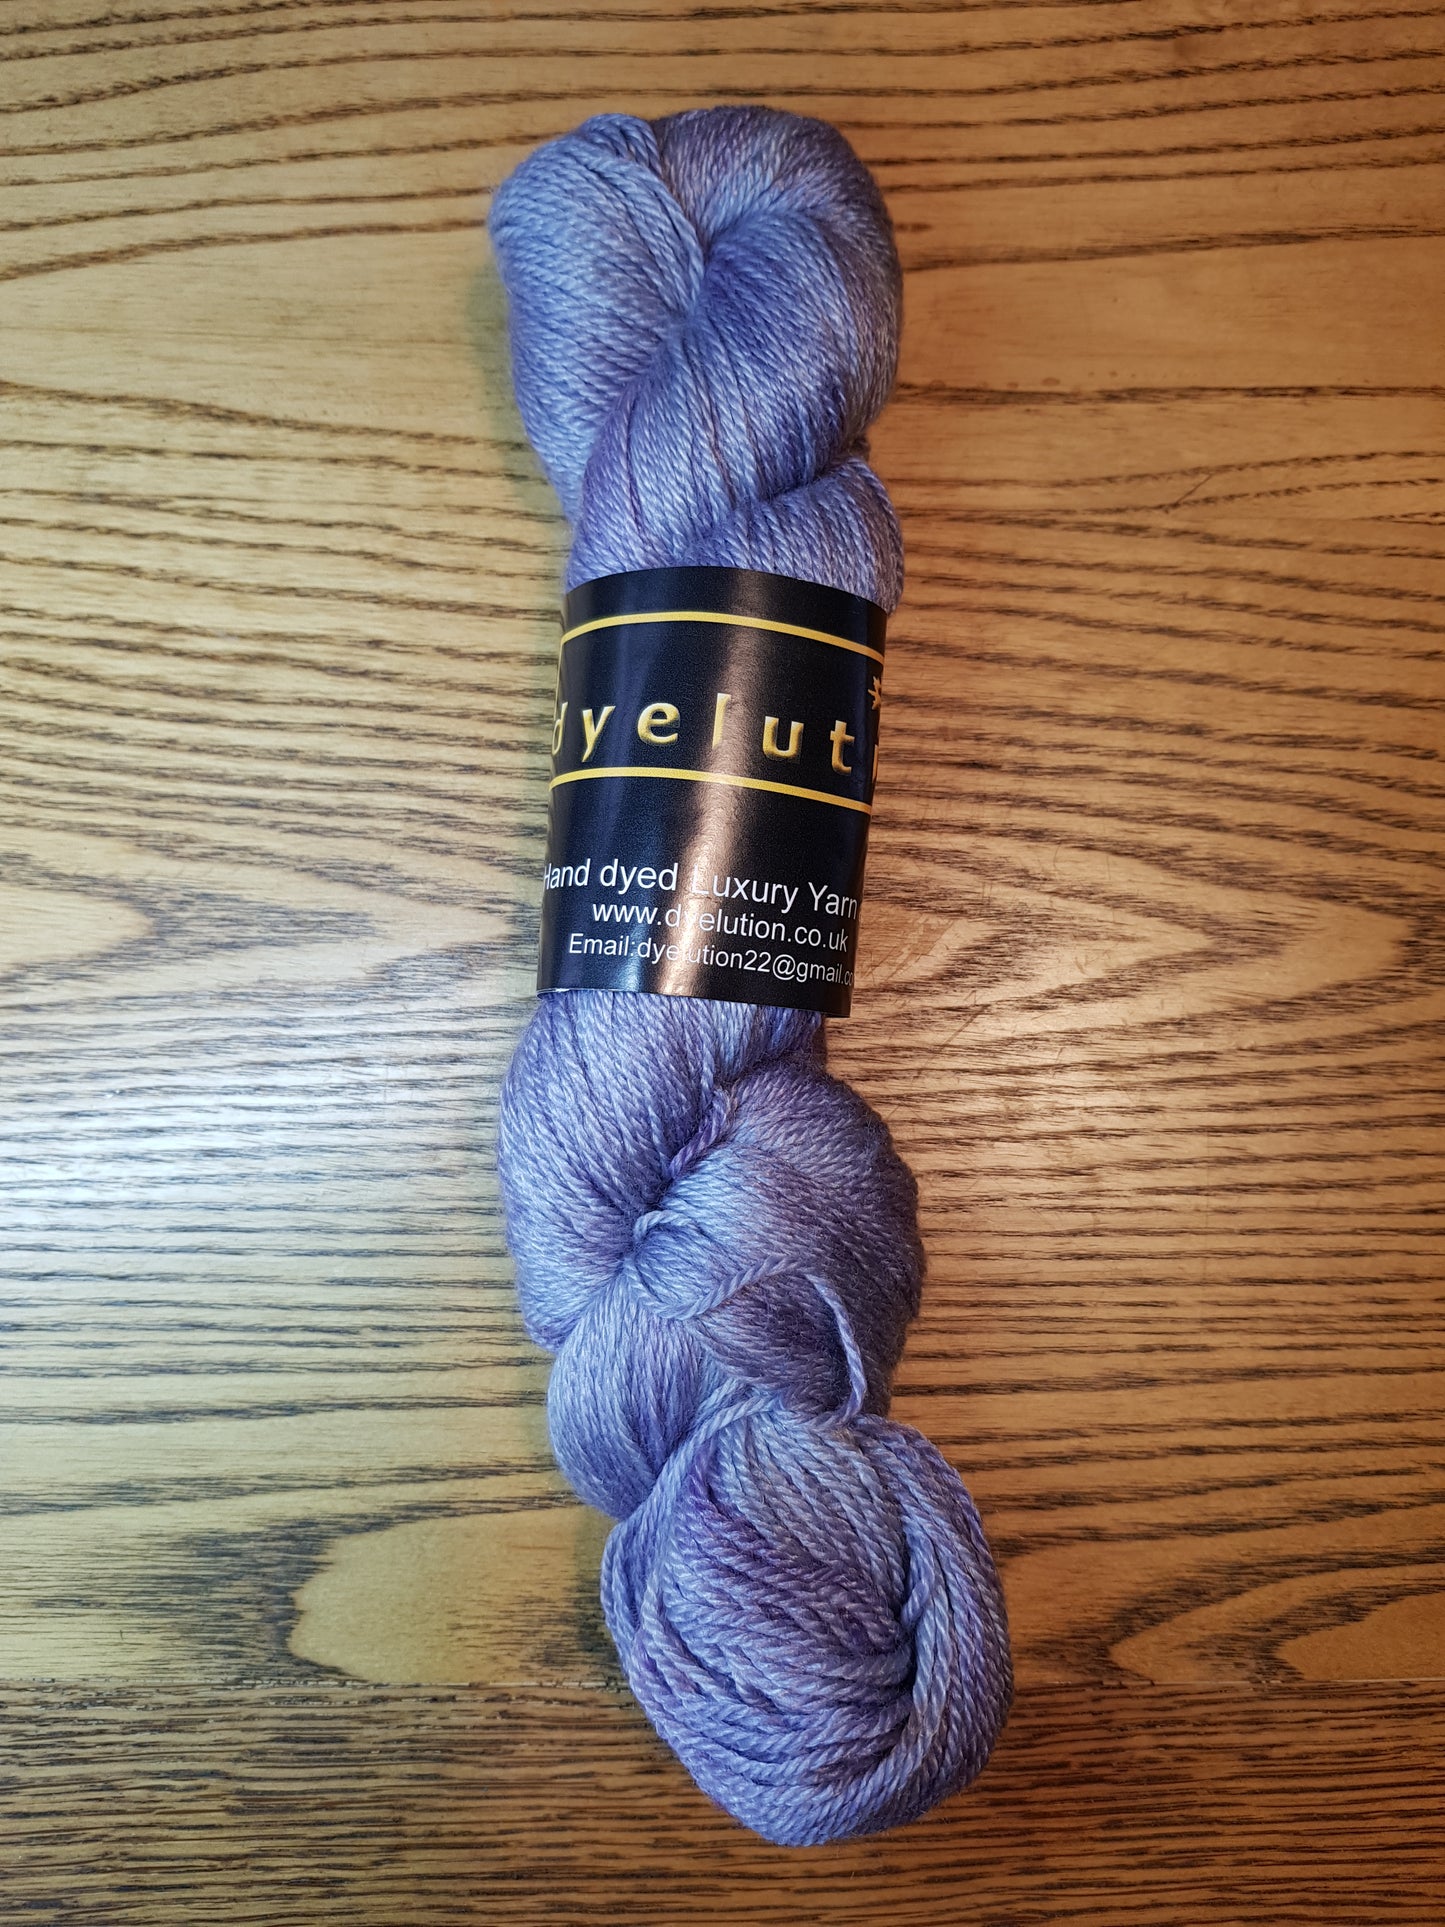 100G Merino/Tencel hand dyed luxury Yarn 4 Ply- "Lavender Haze" - SALE ITEM